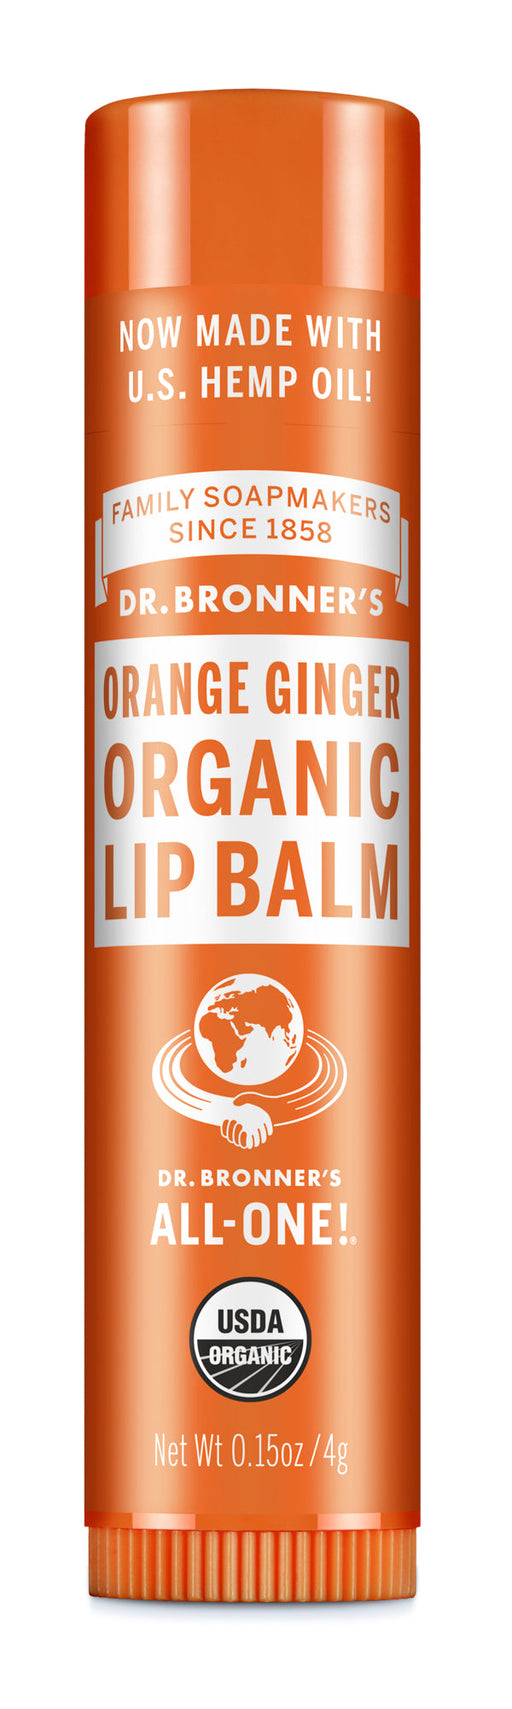 Orange Ginger - Organic Lip Balms - by Dr Bronner's |ProCare Outlet|